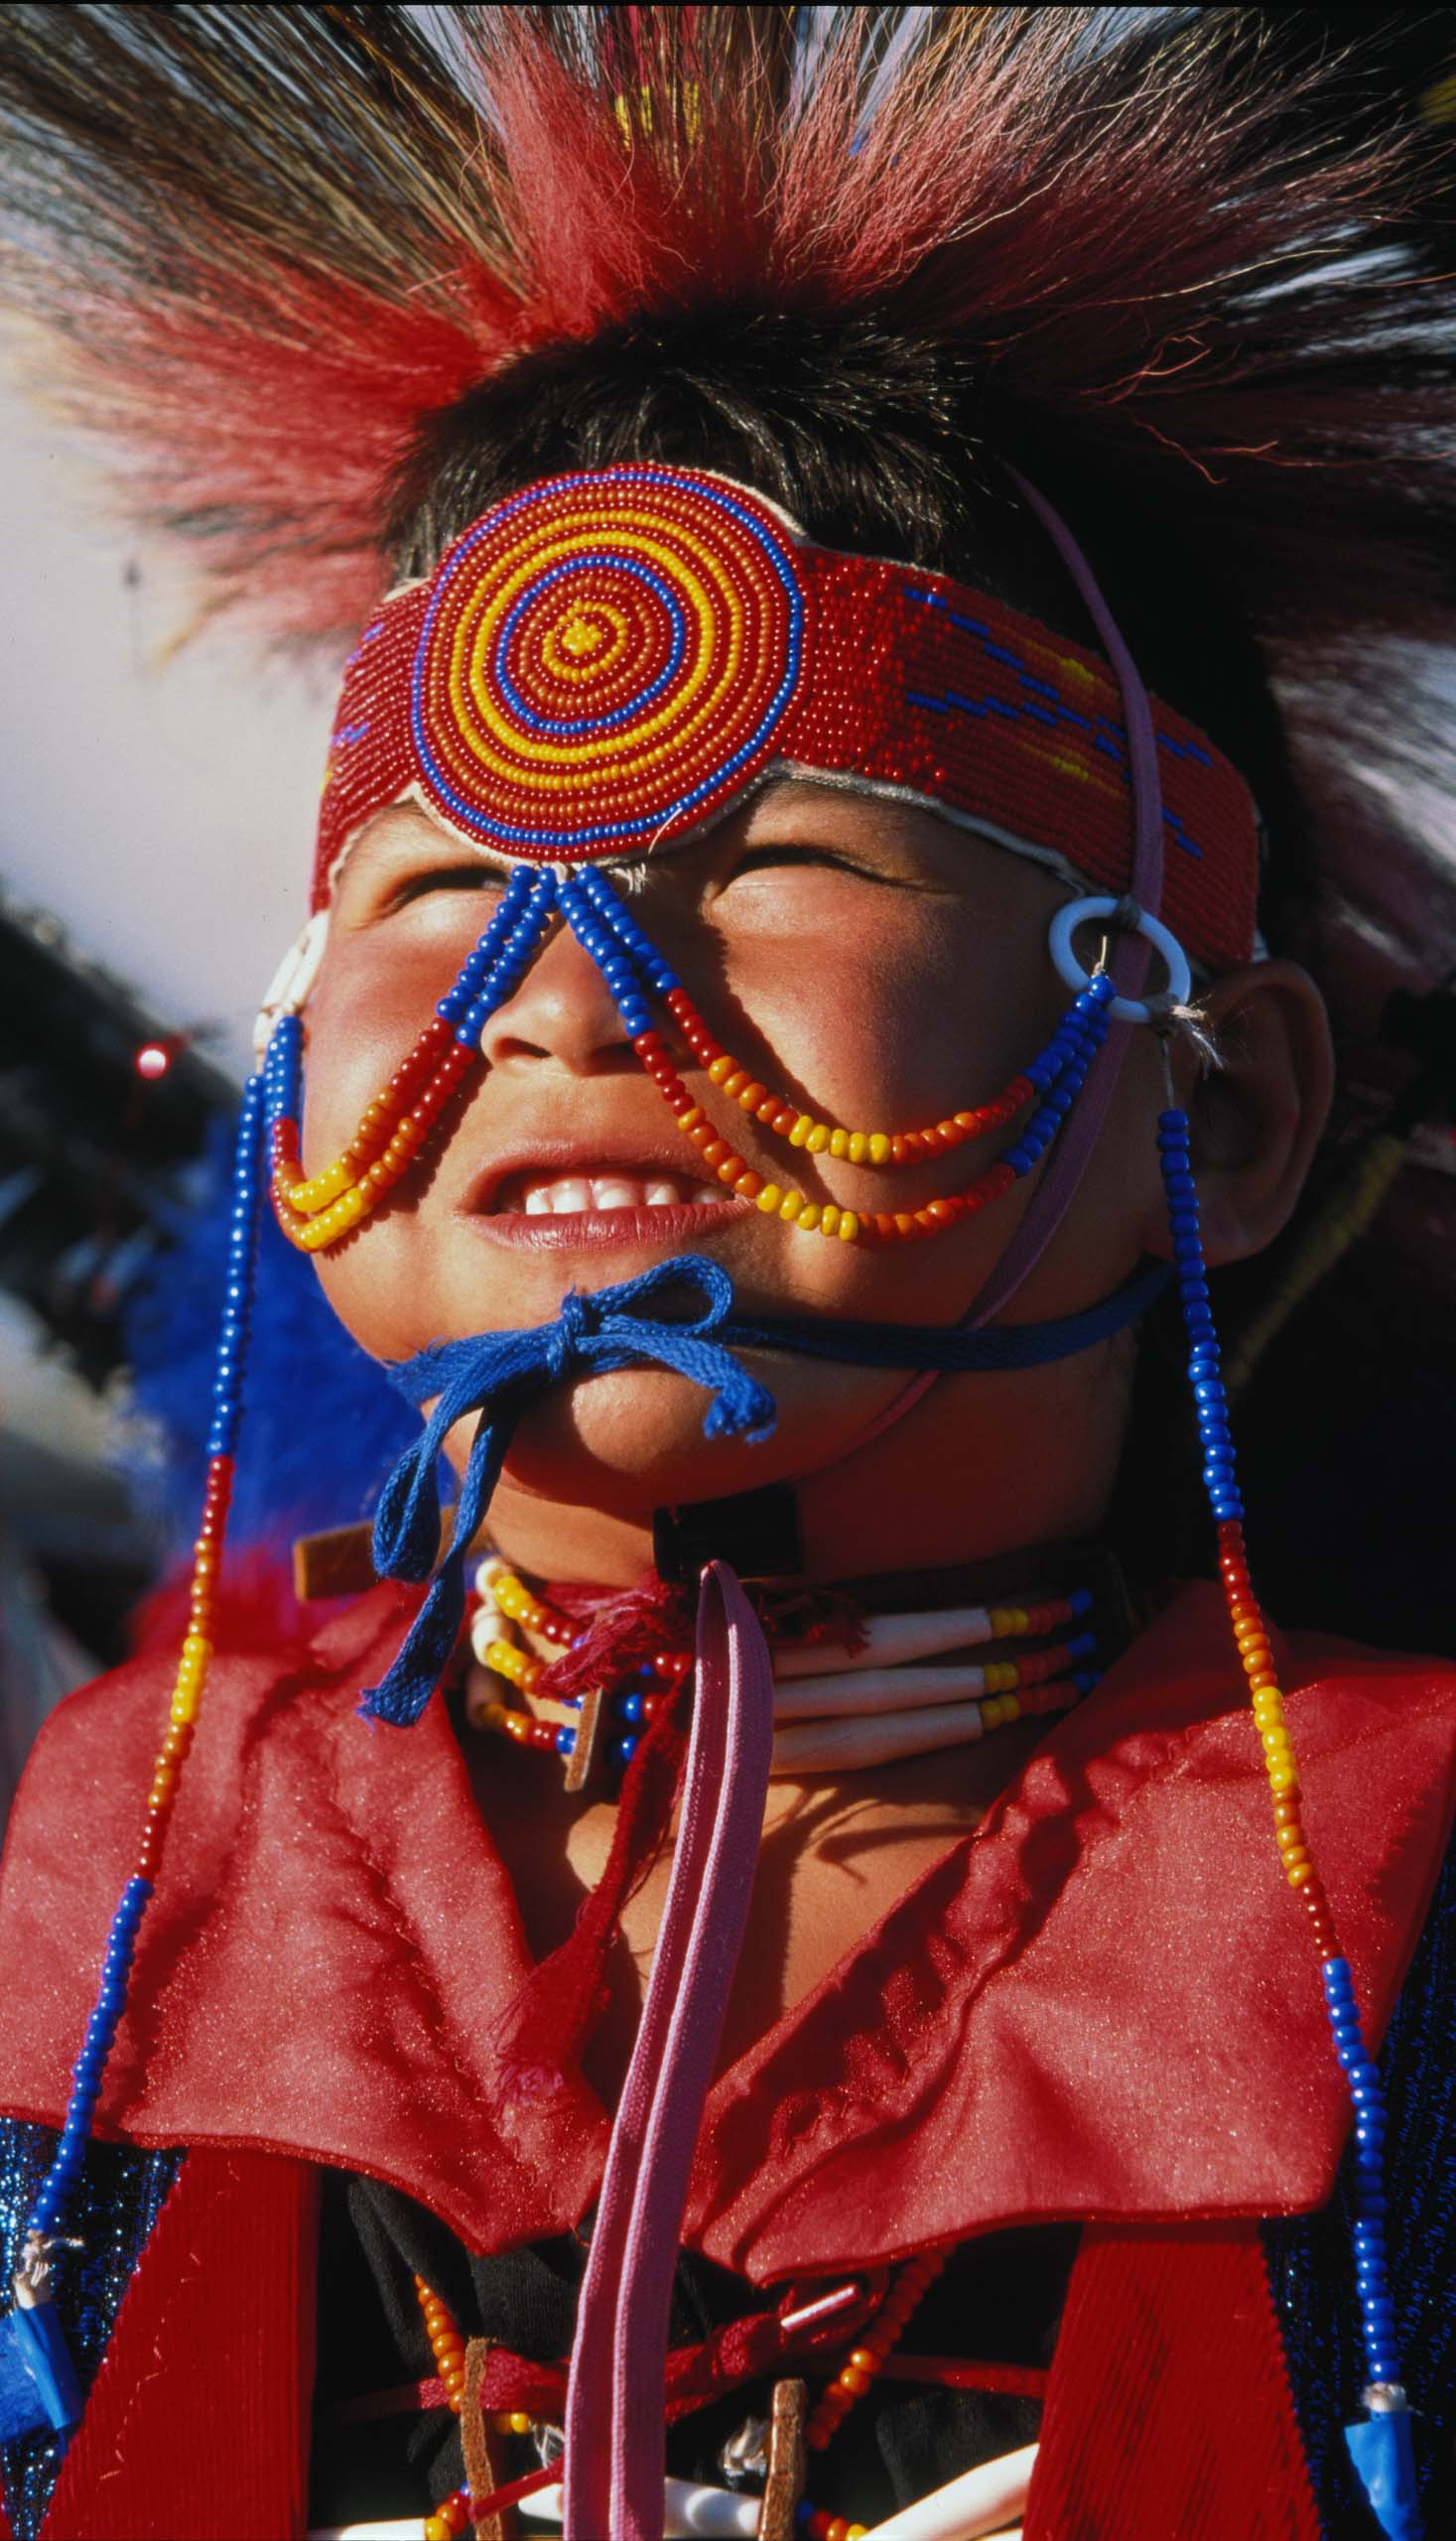 A native american child.